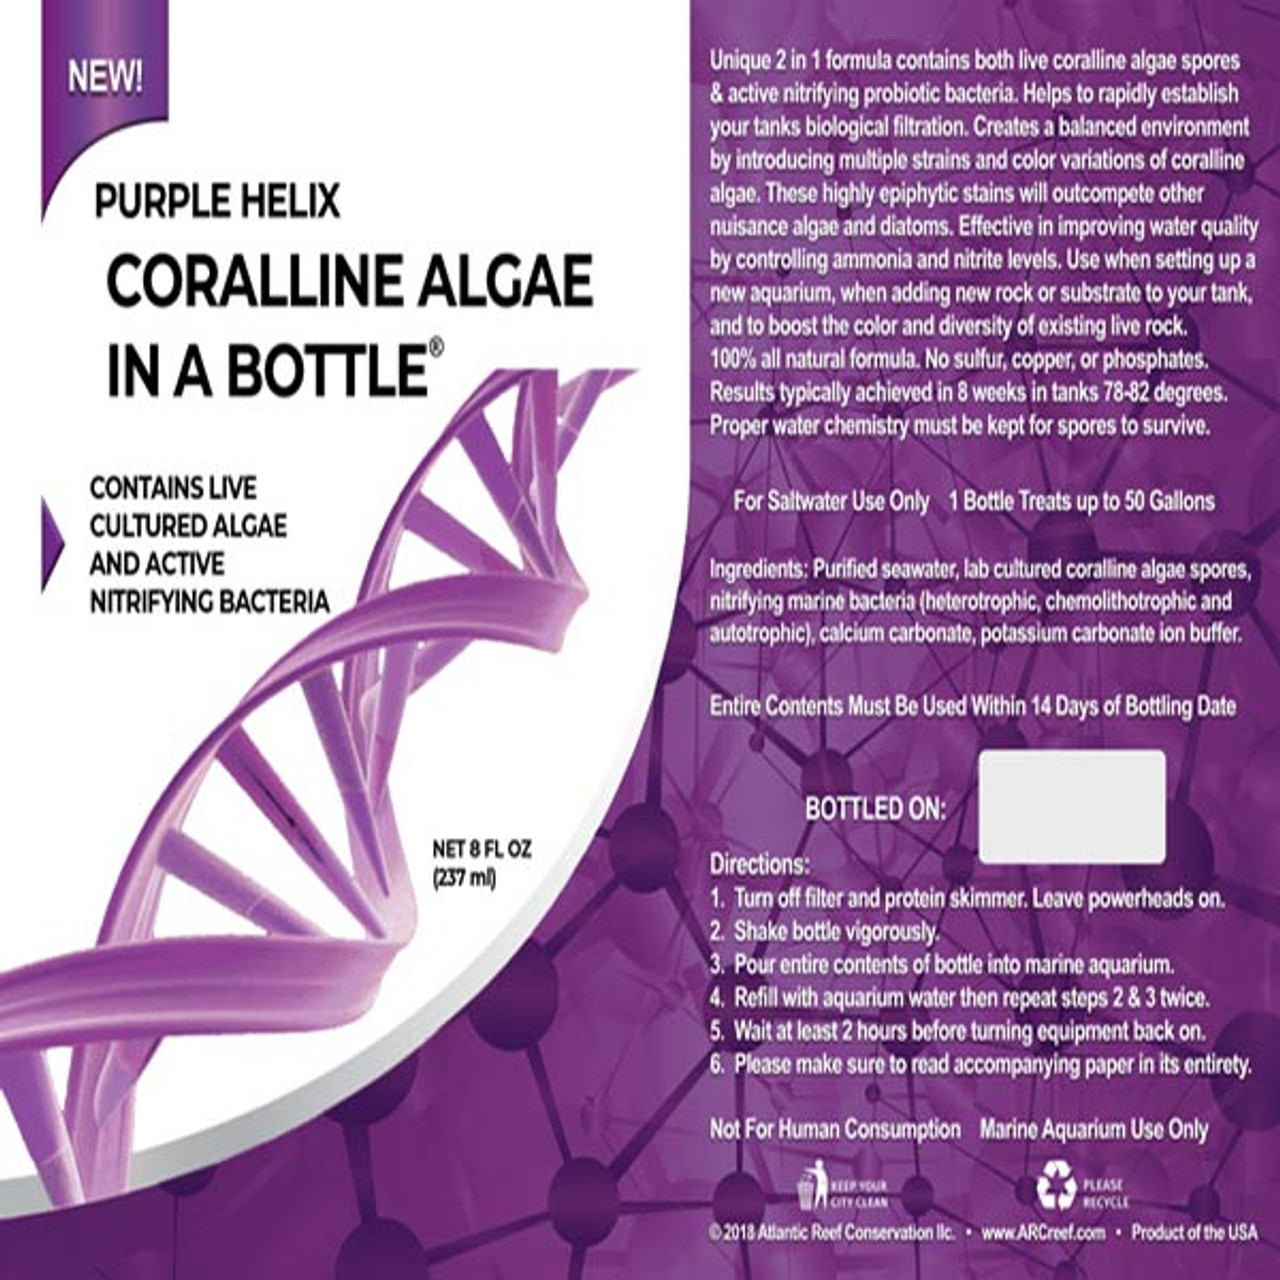 https://cdn11.bigcommerce.com/s-fh5tkm/images/stencil/1280x1280/products/4968/17160/coralline-algae-spores-purple-helix-up-coraline-bottle__00729.1565094475.jpg?c=2?imbypass=on